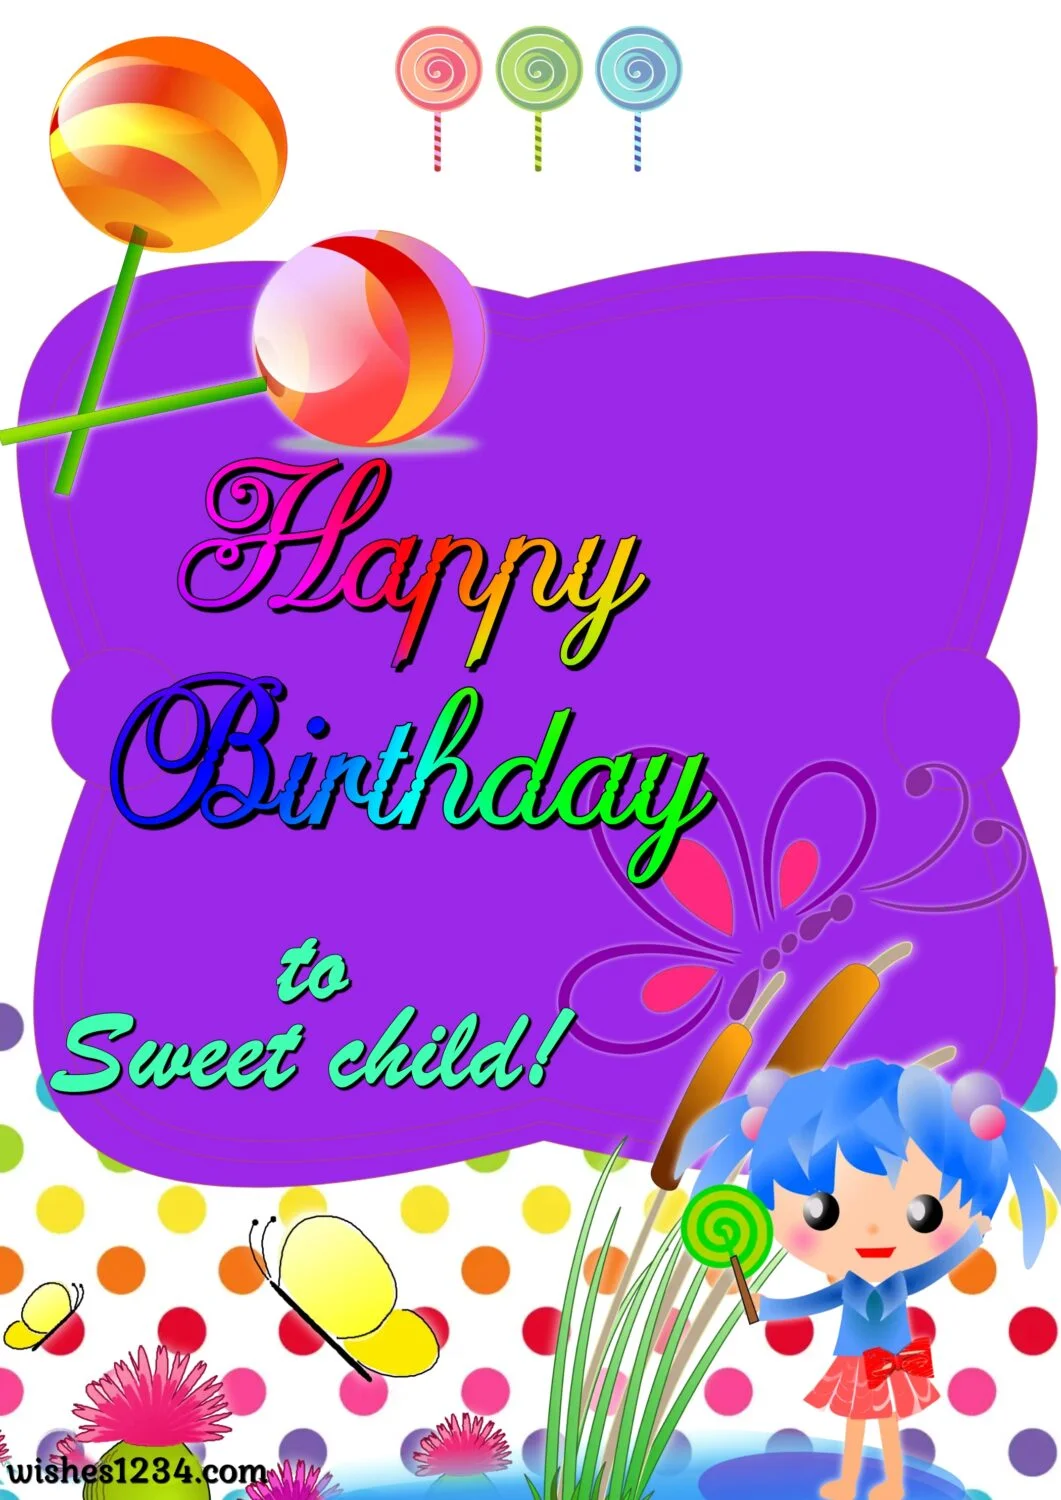 Girl with lollipop, Kids birthday | Happy Birthday wishes for kids.